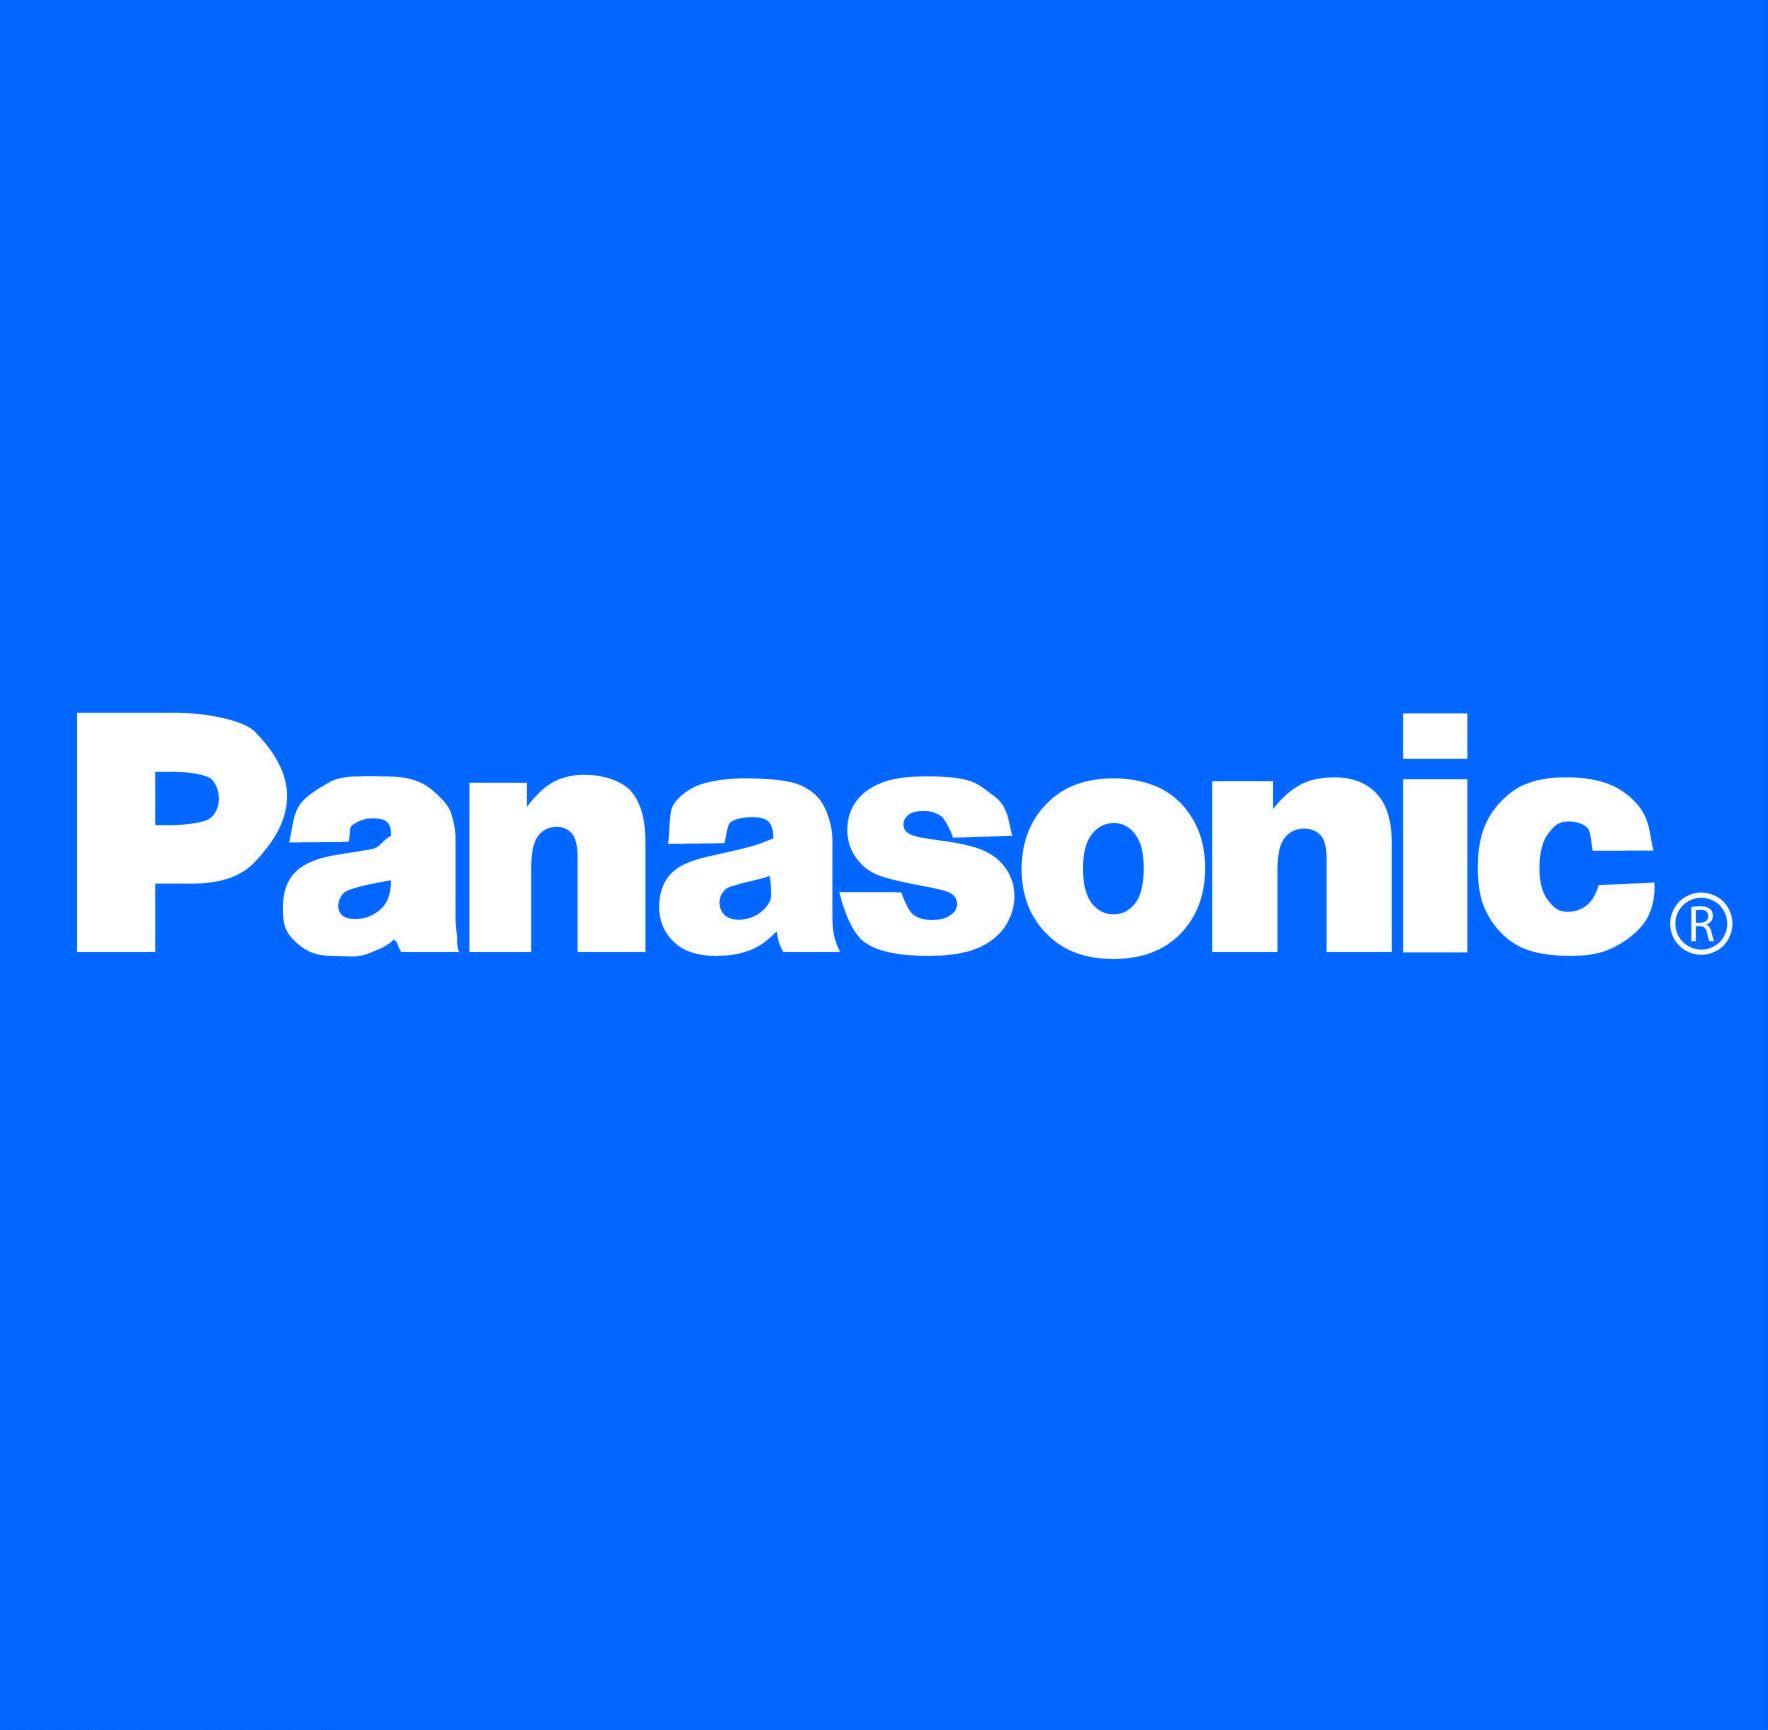 Panasonic Wallpapers - Wallpaper Cave